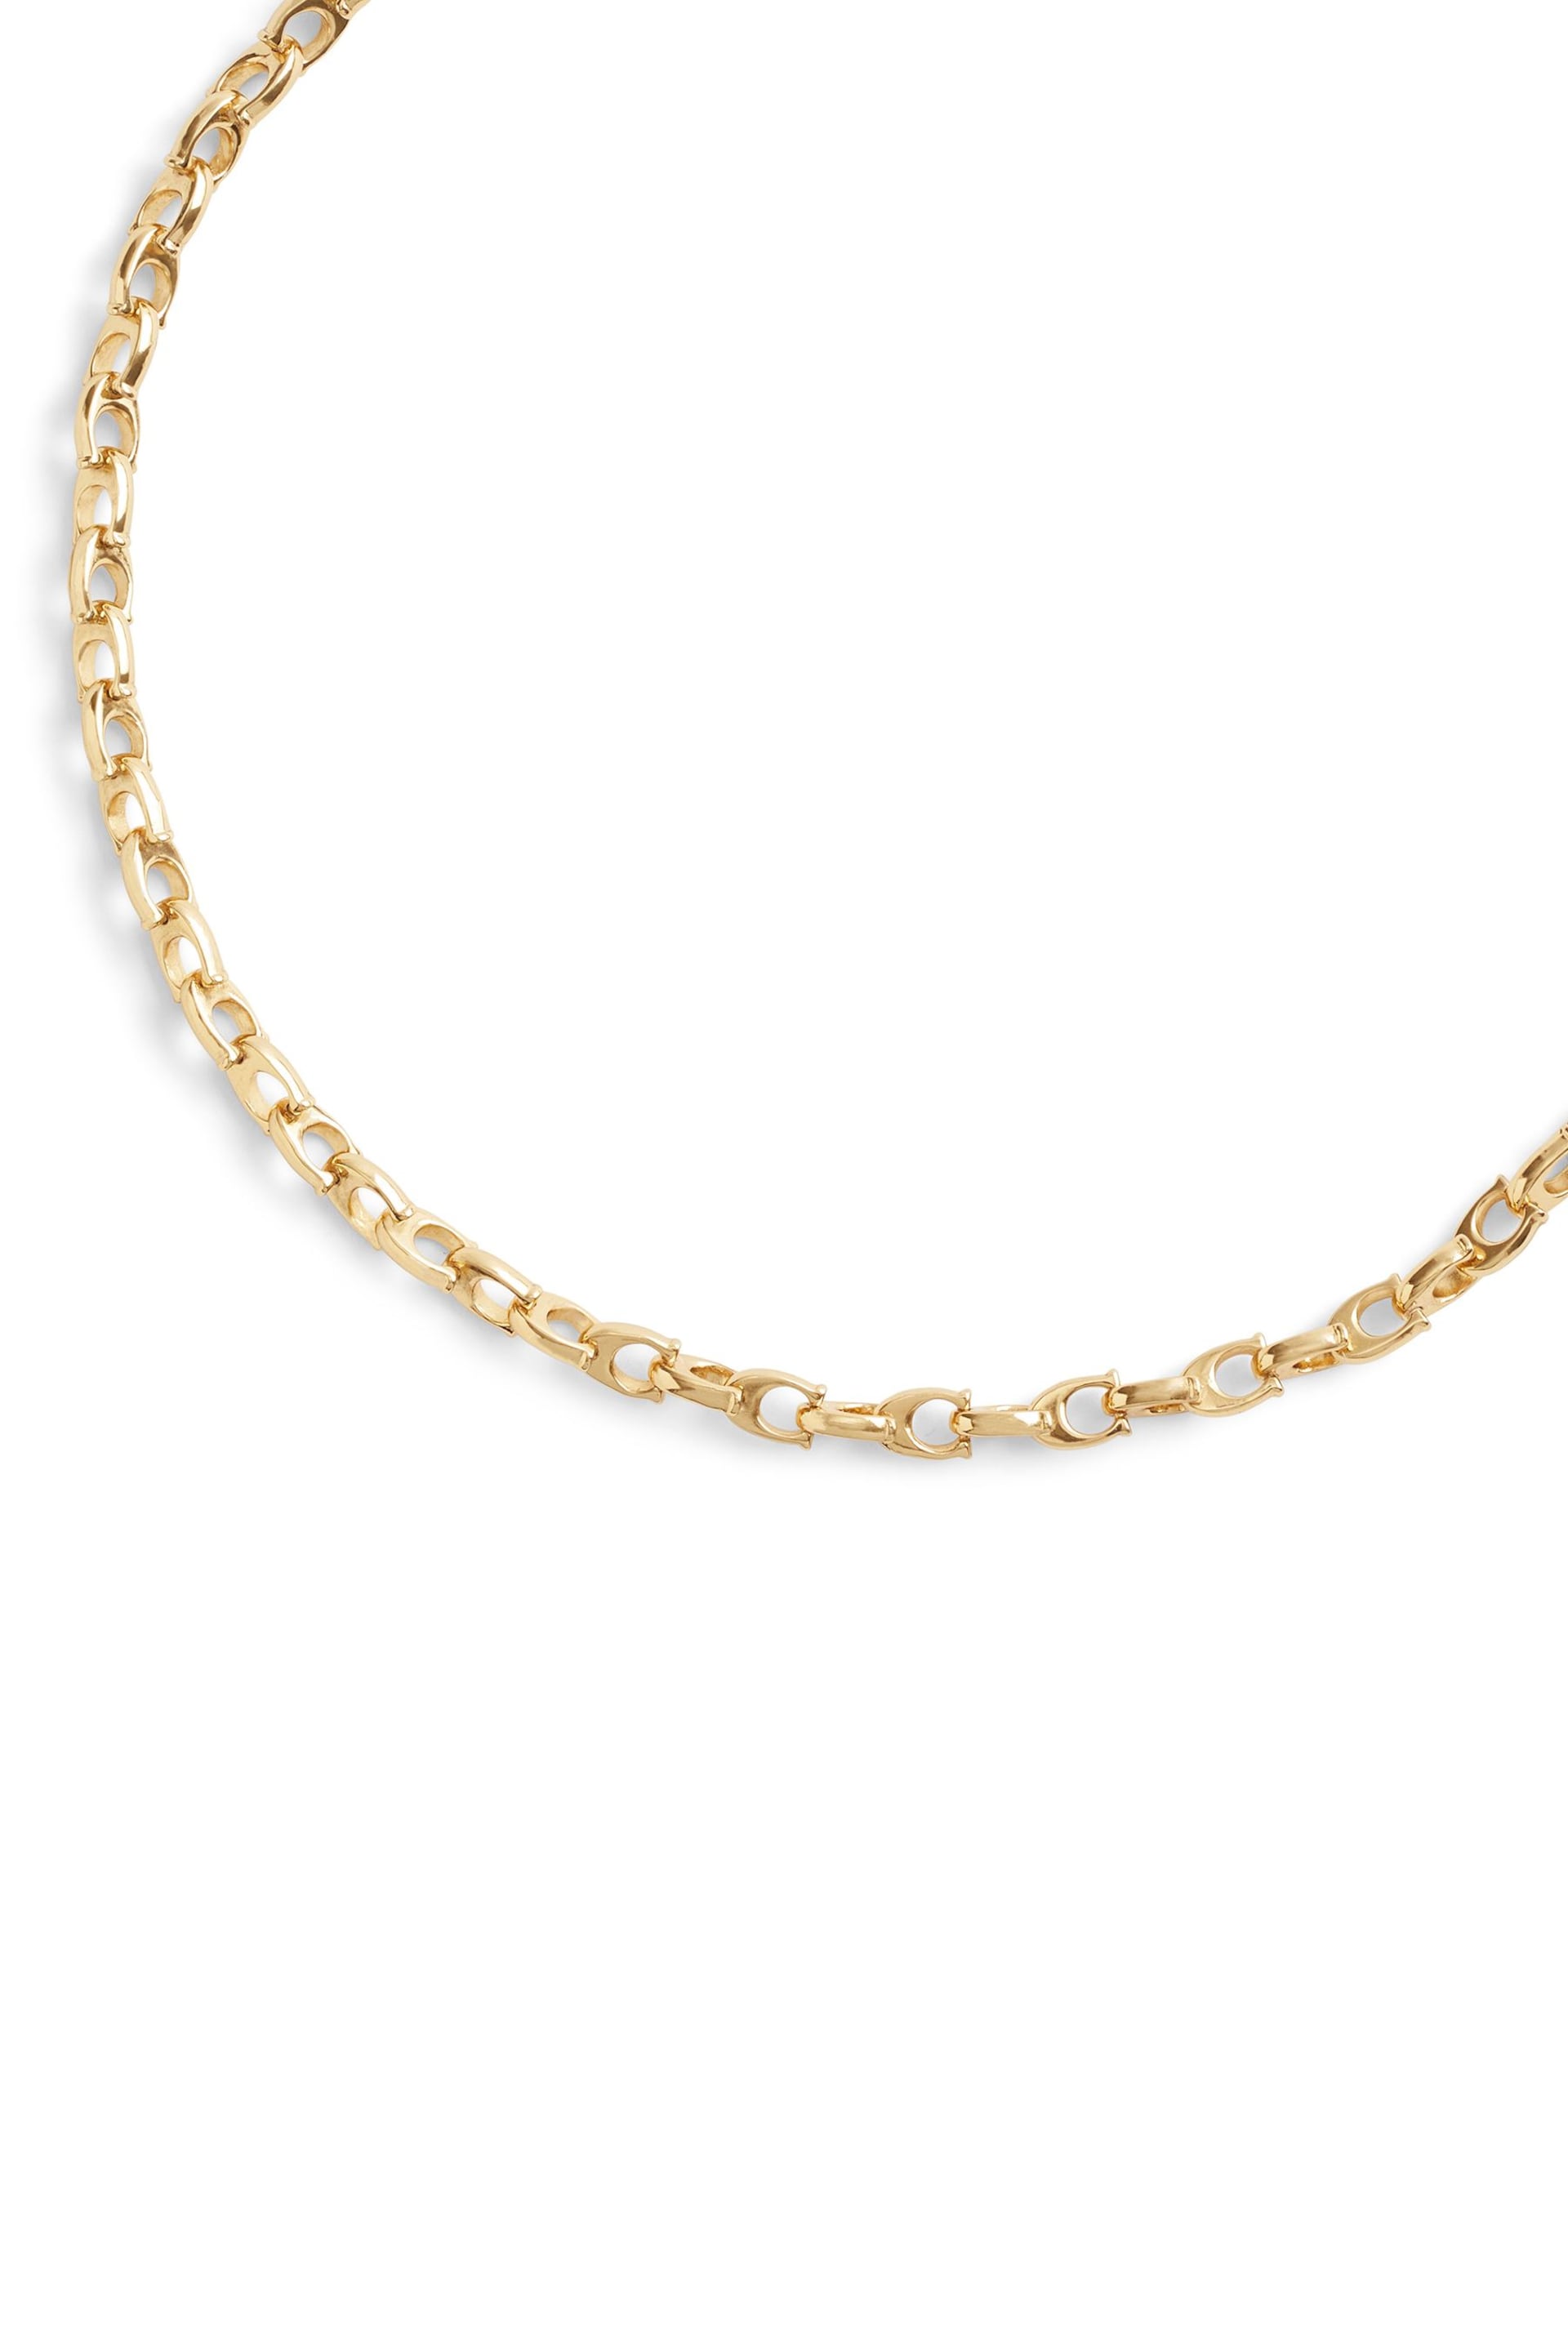 COACH Gold Tone Signature C Choker Necklace - Image 2 of 3